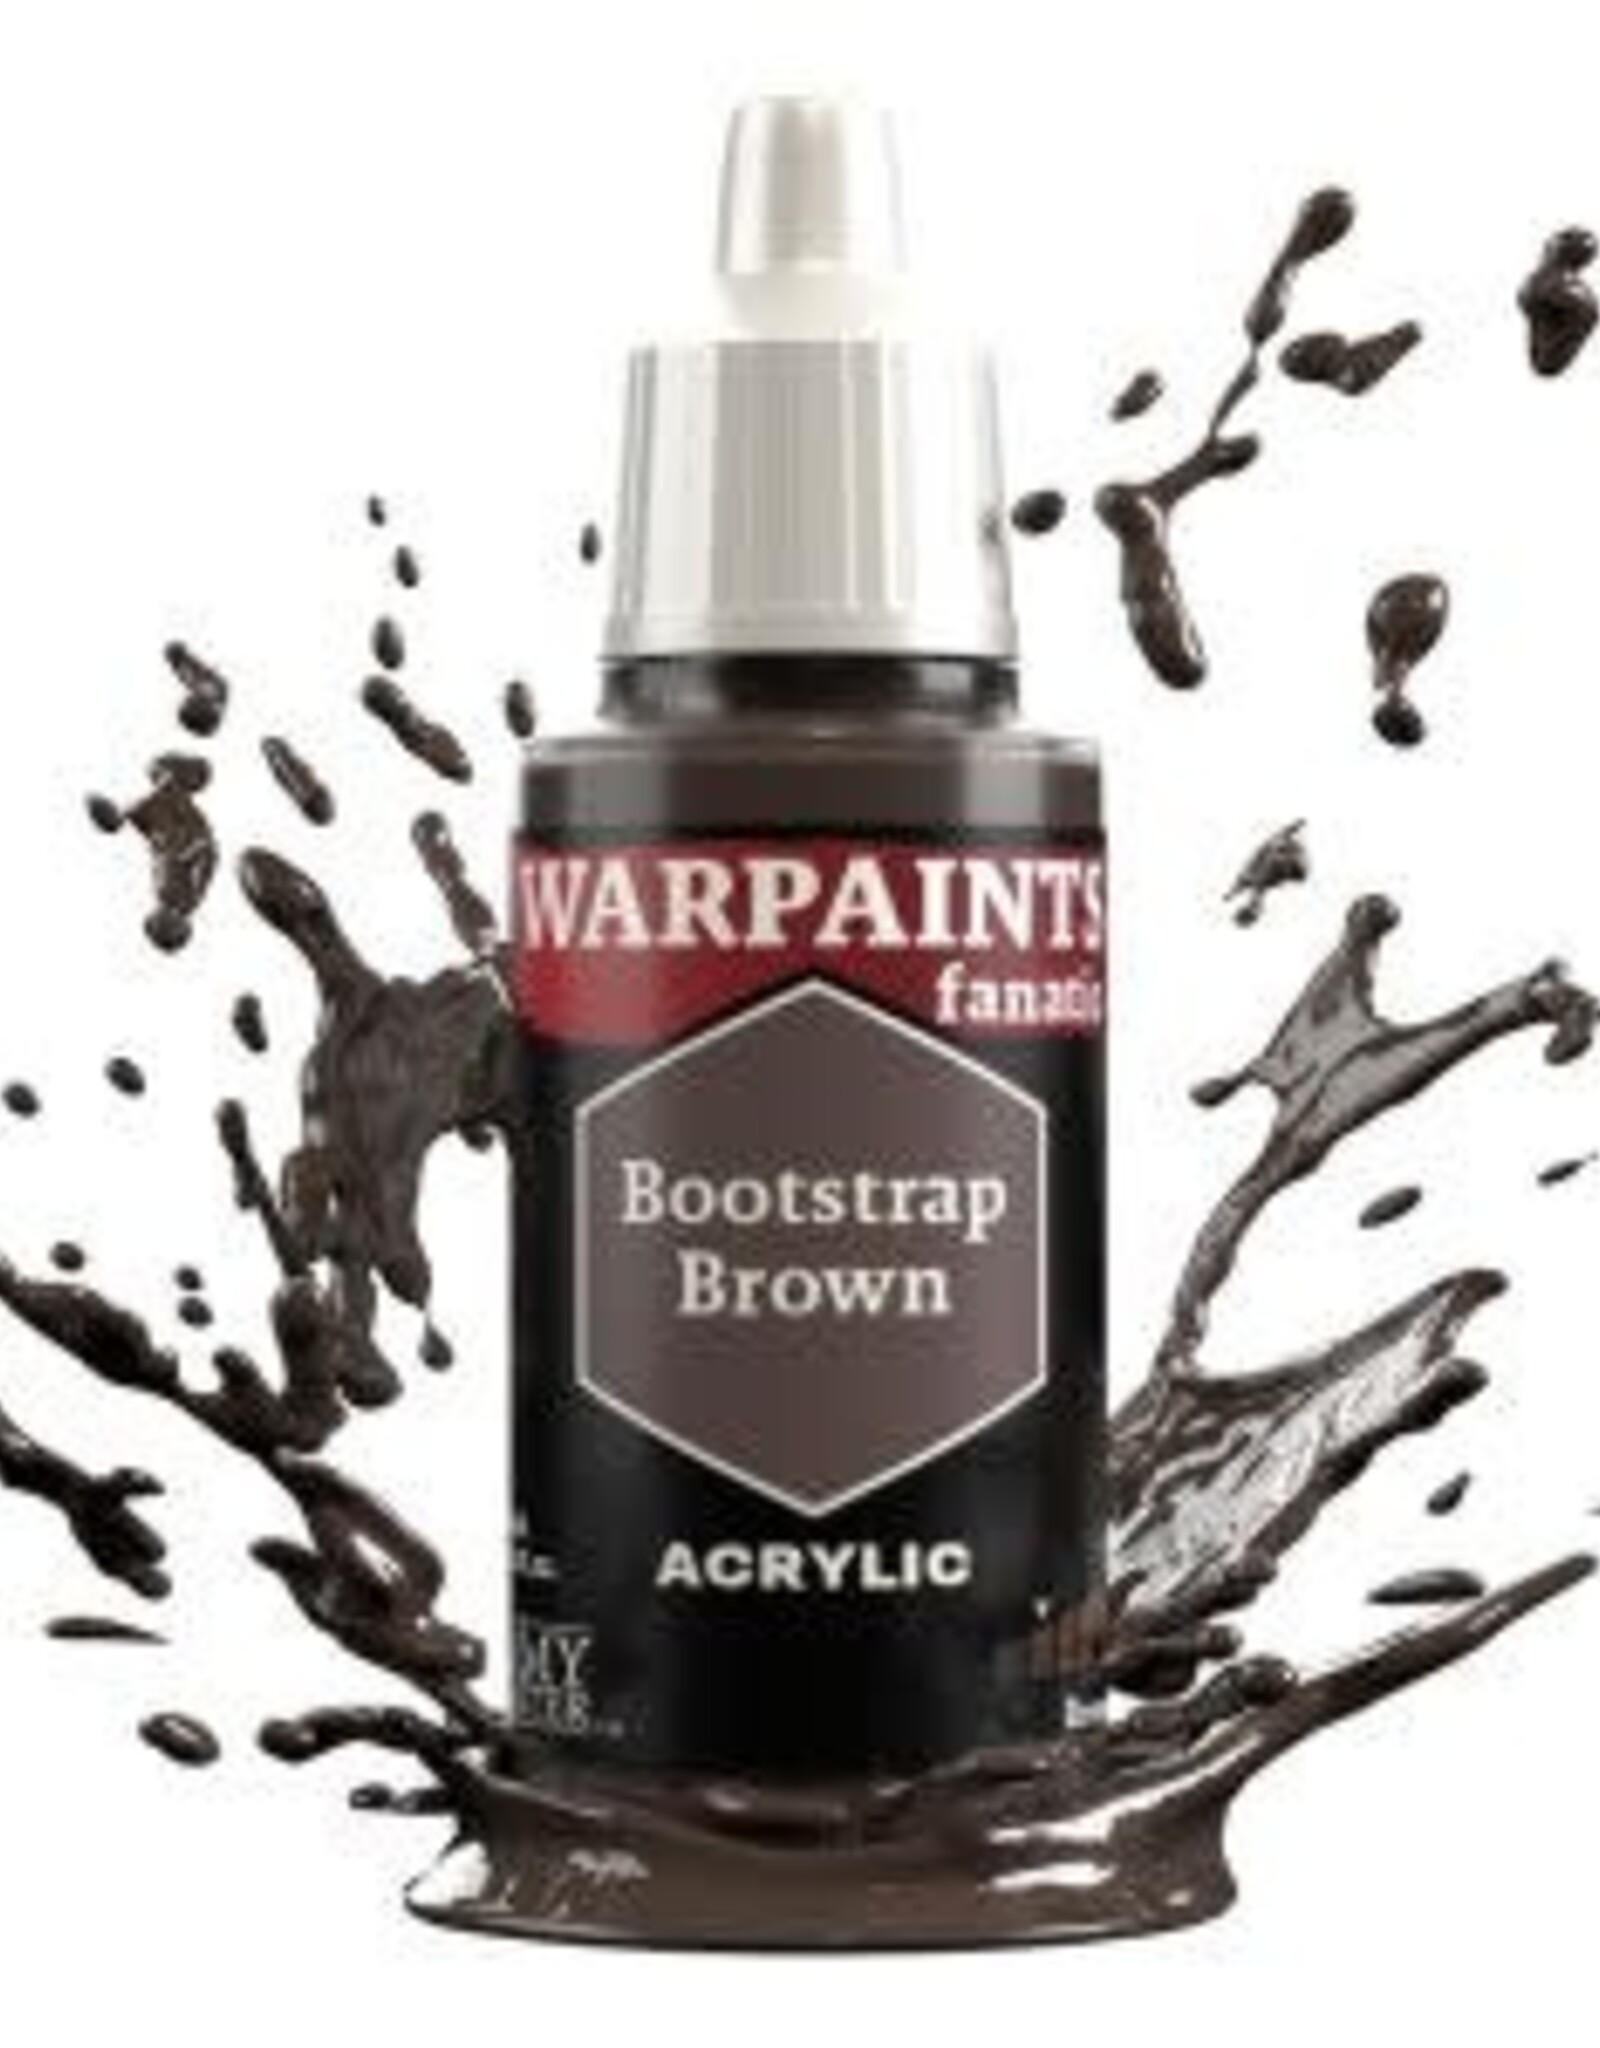 Warpaints Fanatic: Bootstrap Brown